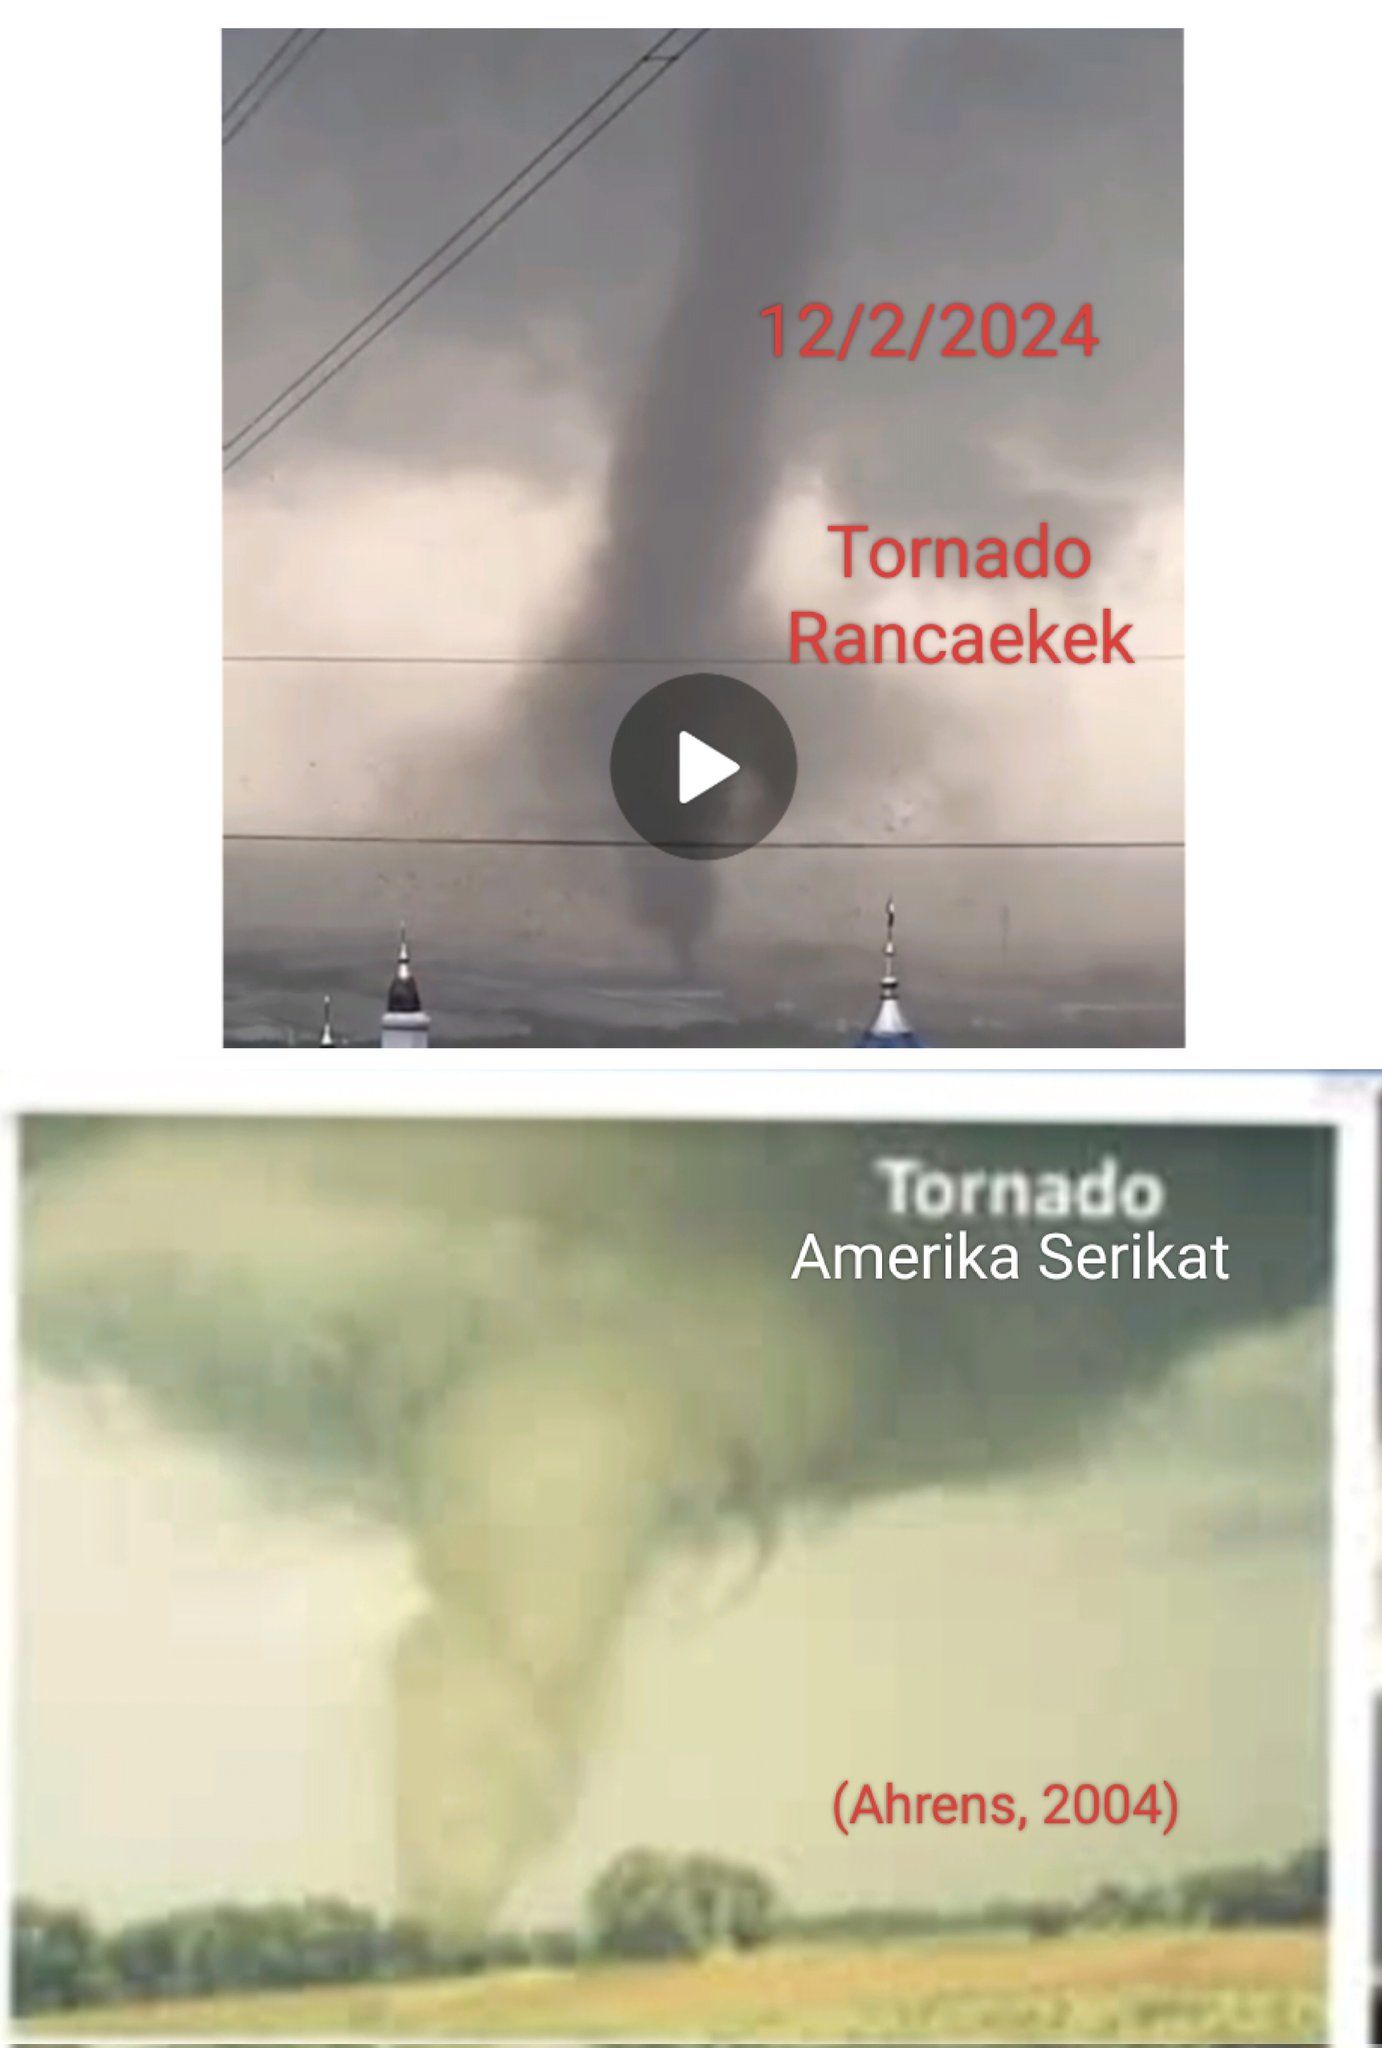 Fenomena angin yang melanda Rancaekek, Sumedang, Jawa Barat pada Rabu 21 Februari 2024 disebut bukan puting beliung tapi tornado.*